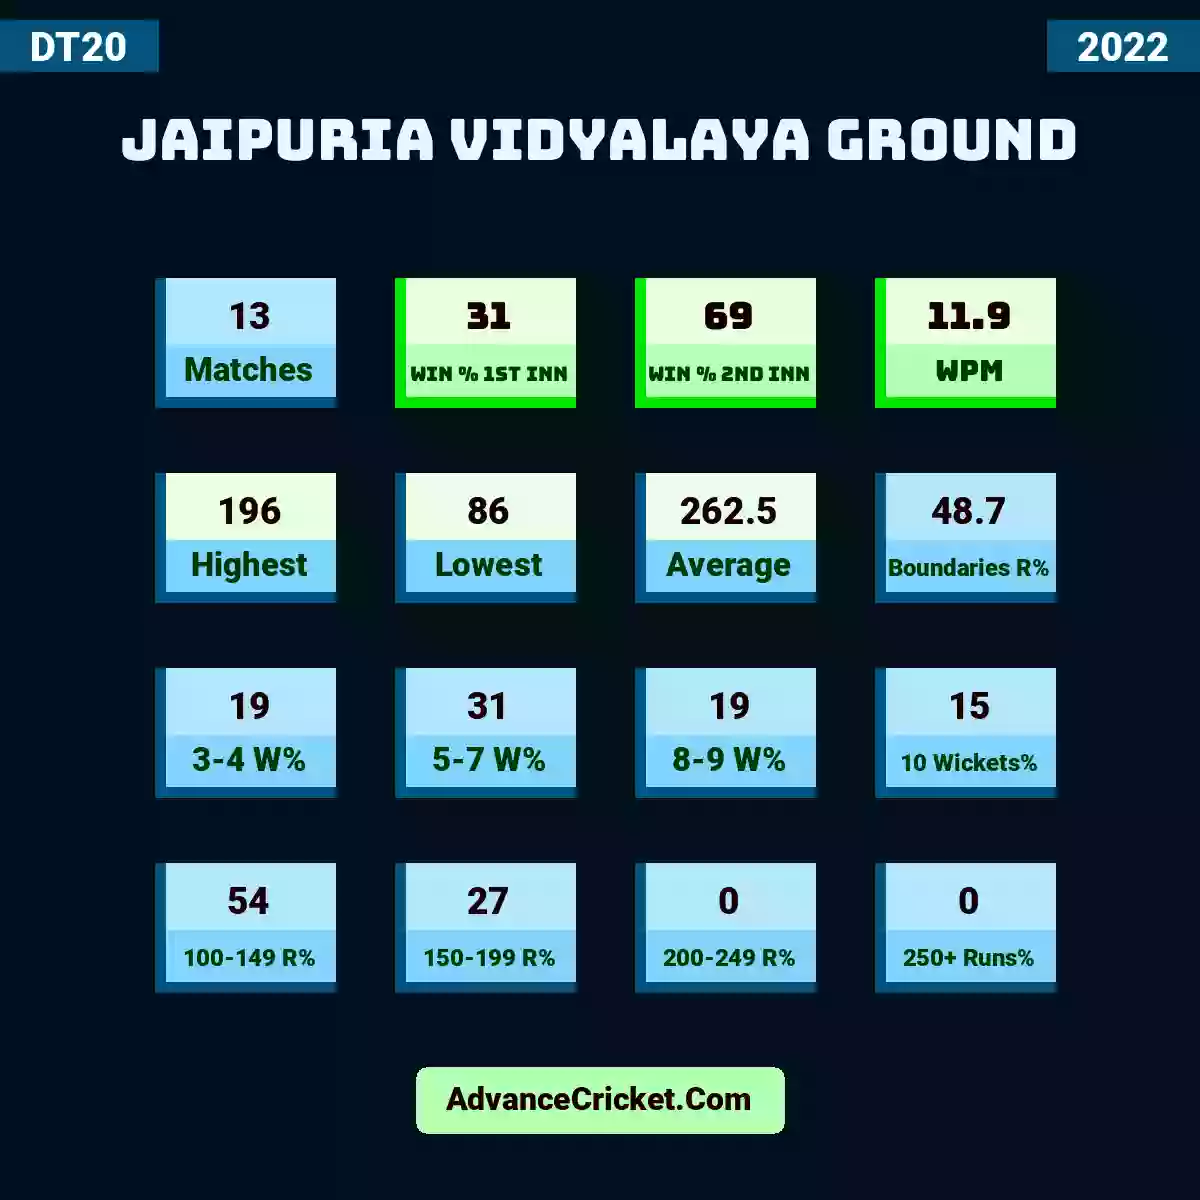 Image showing Jaipuria Vidyalaya Ground with Matches: 13, Win % 1st Inn: 31, Win % 2nd Inn: 69, WPM: 11.9, Highest: 196, Lowest: 86, Average: 262.5, Boundaries R%: 48.7, 3-4 W%: 19, 5-7 W%: 31, 8-9 W%: 19, 10 Wickets%: 15, 100-149 R%: 54, 150-199 R%: 27, 200-249 R%: 0, 250+ Runs%: 0.